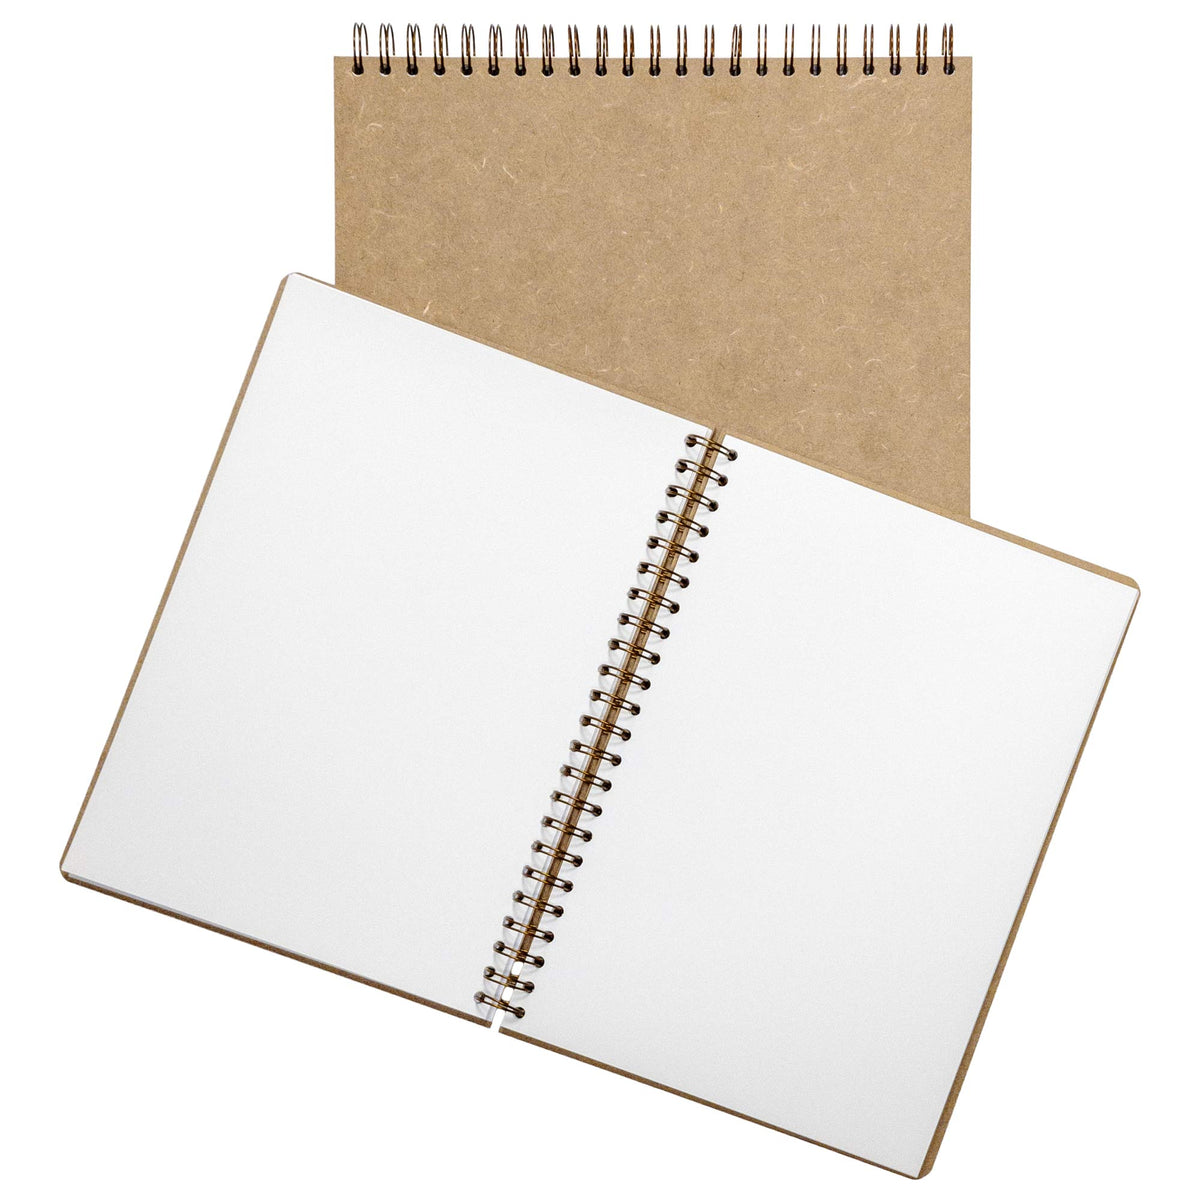 Seawhite Euro Drawing Board Covers Sketchbook